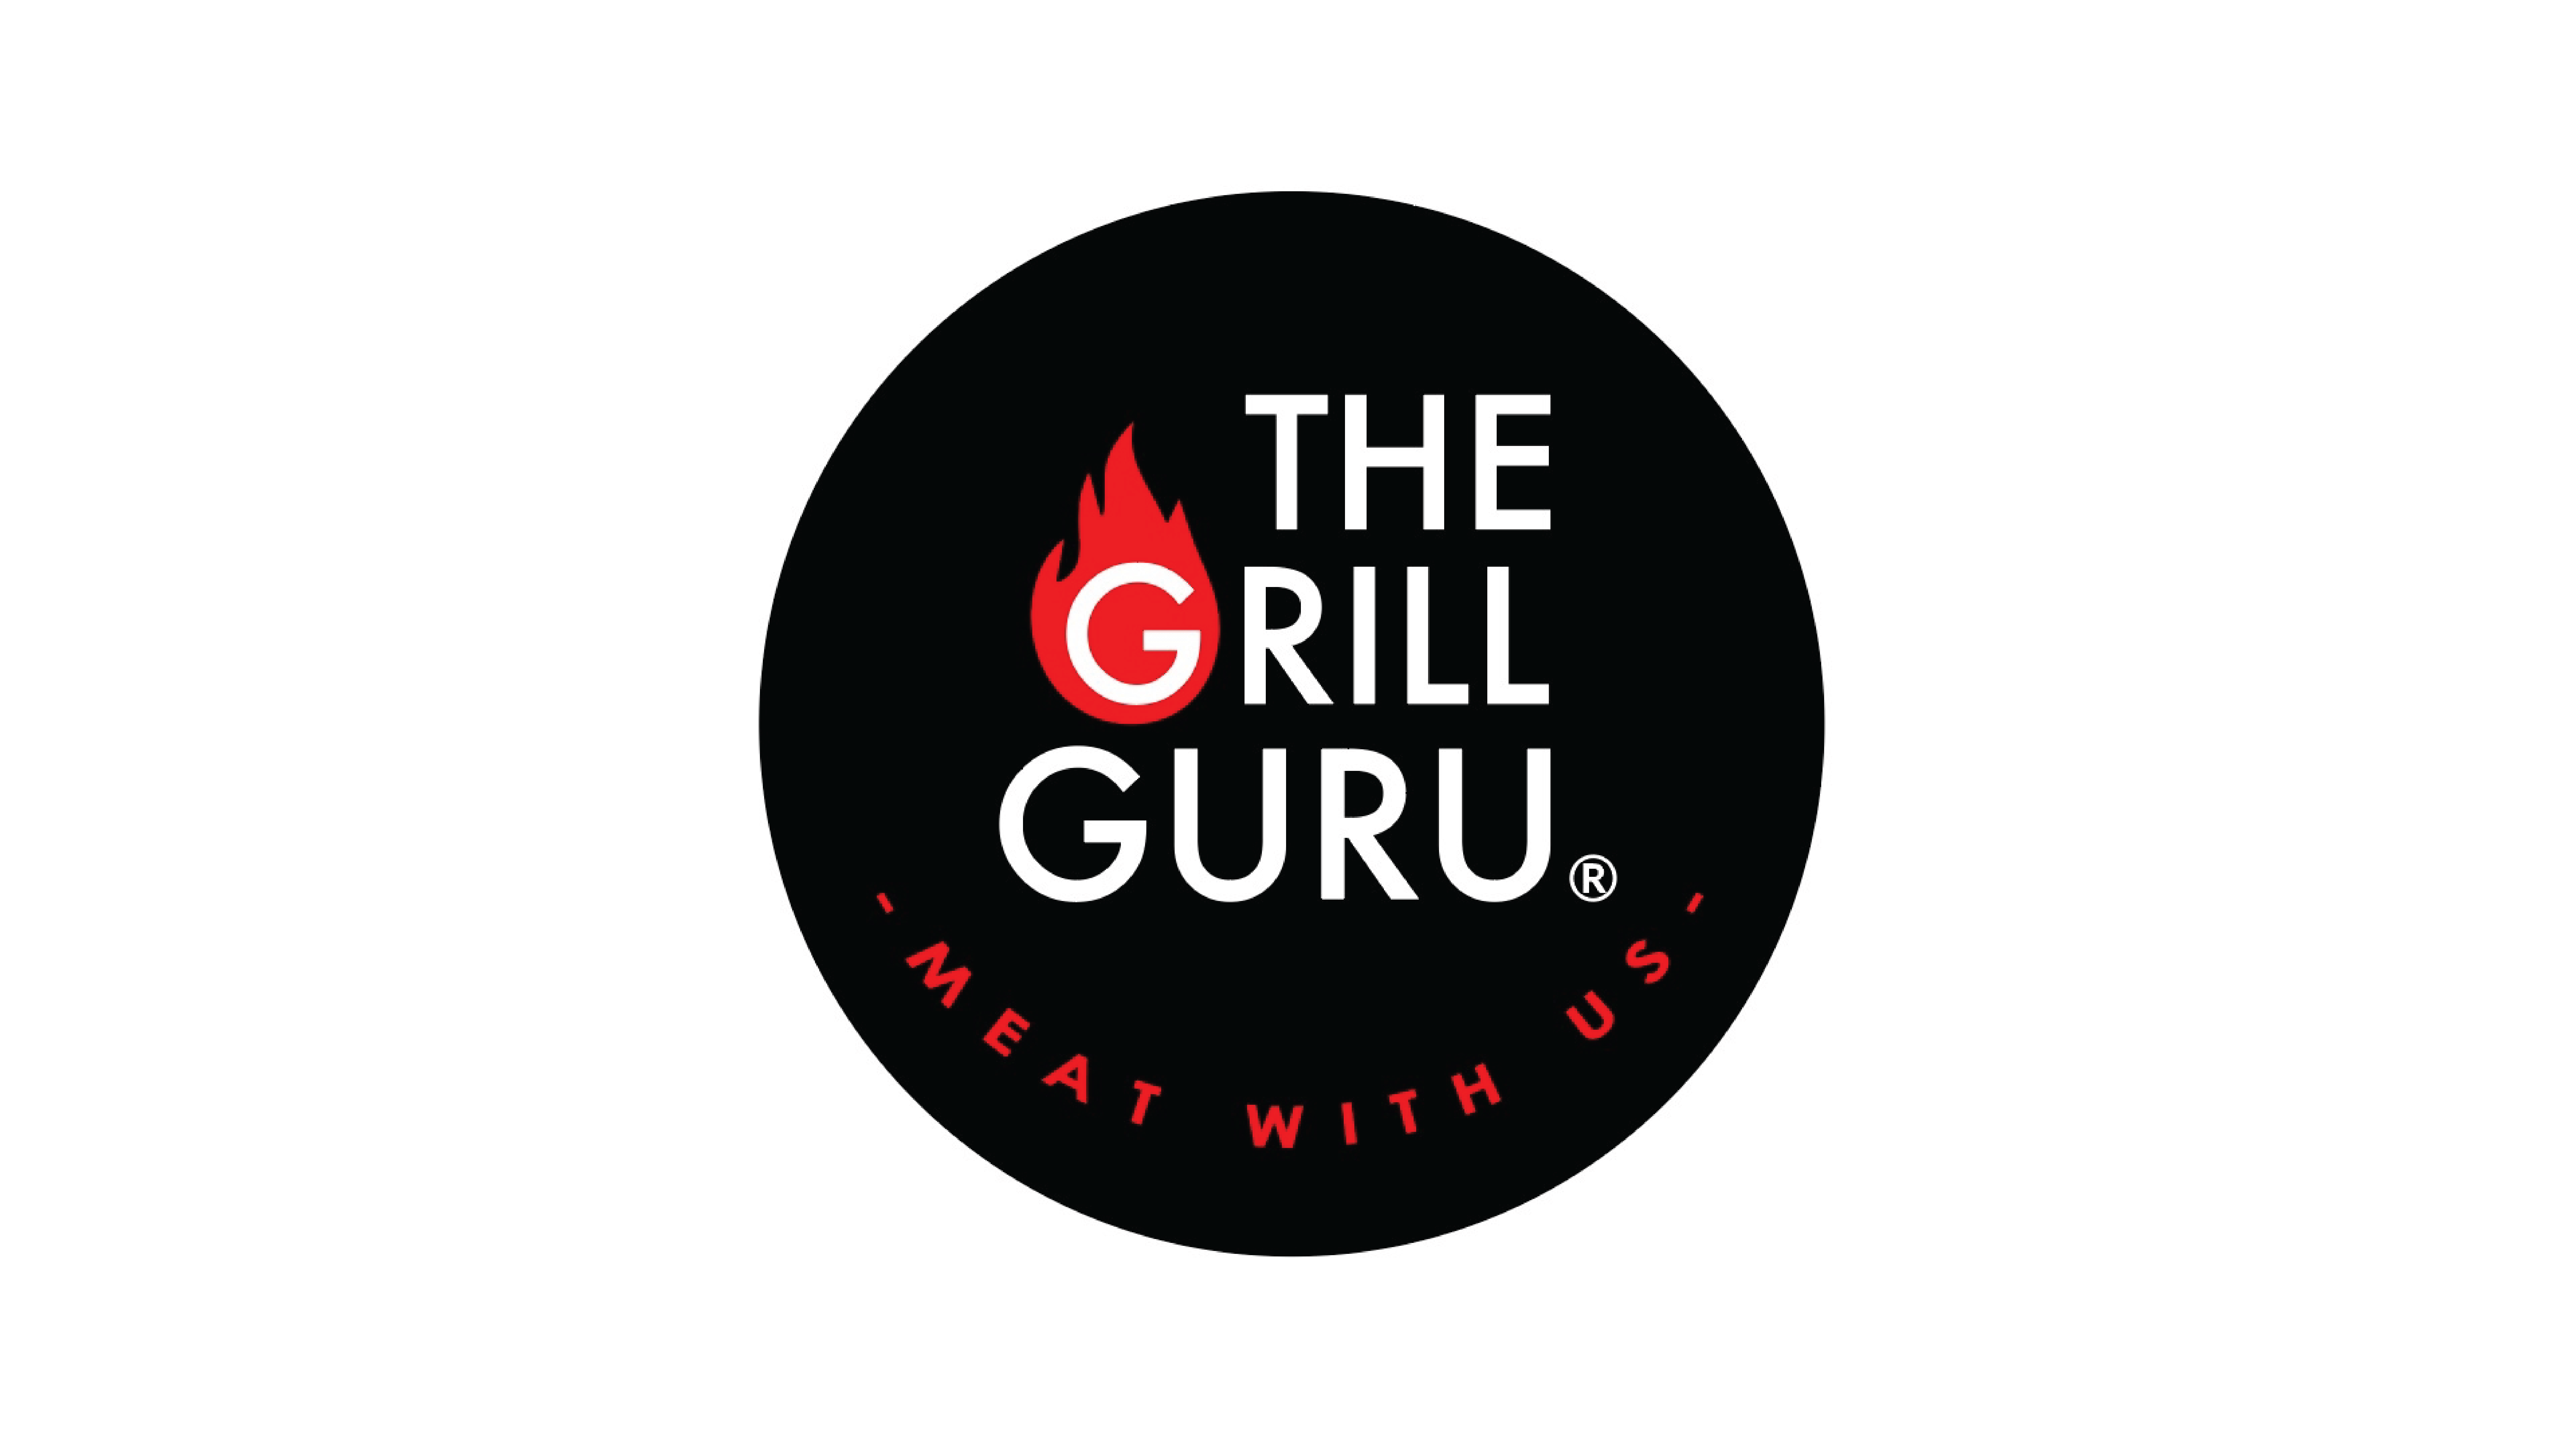 THE GRILL GURU